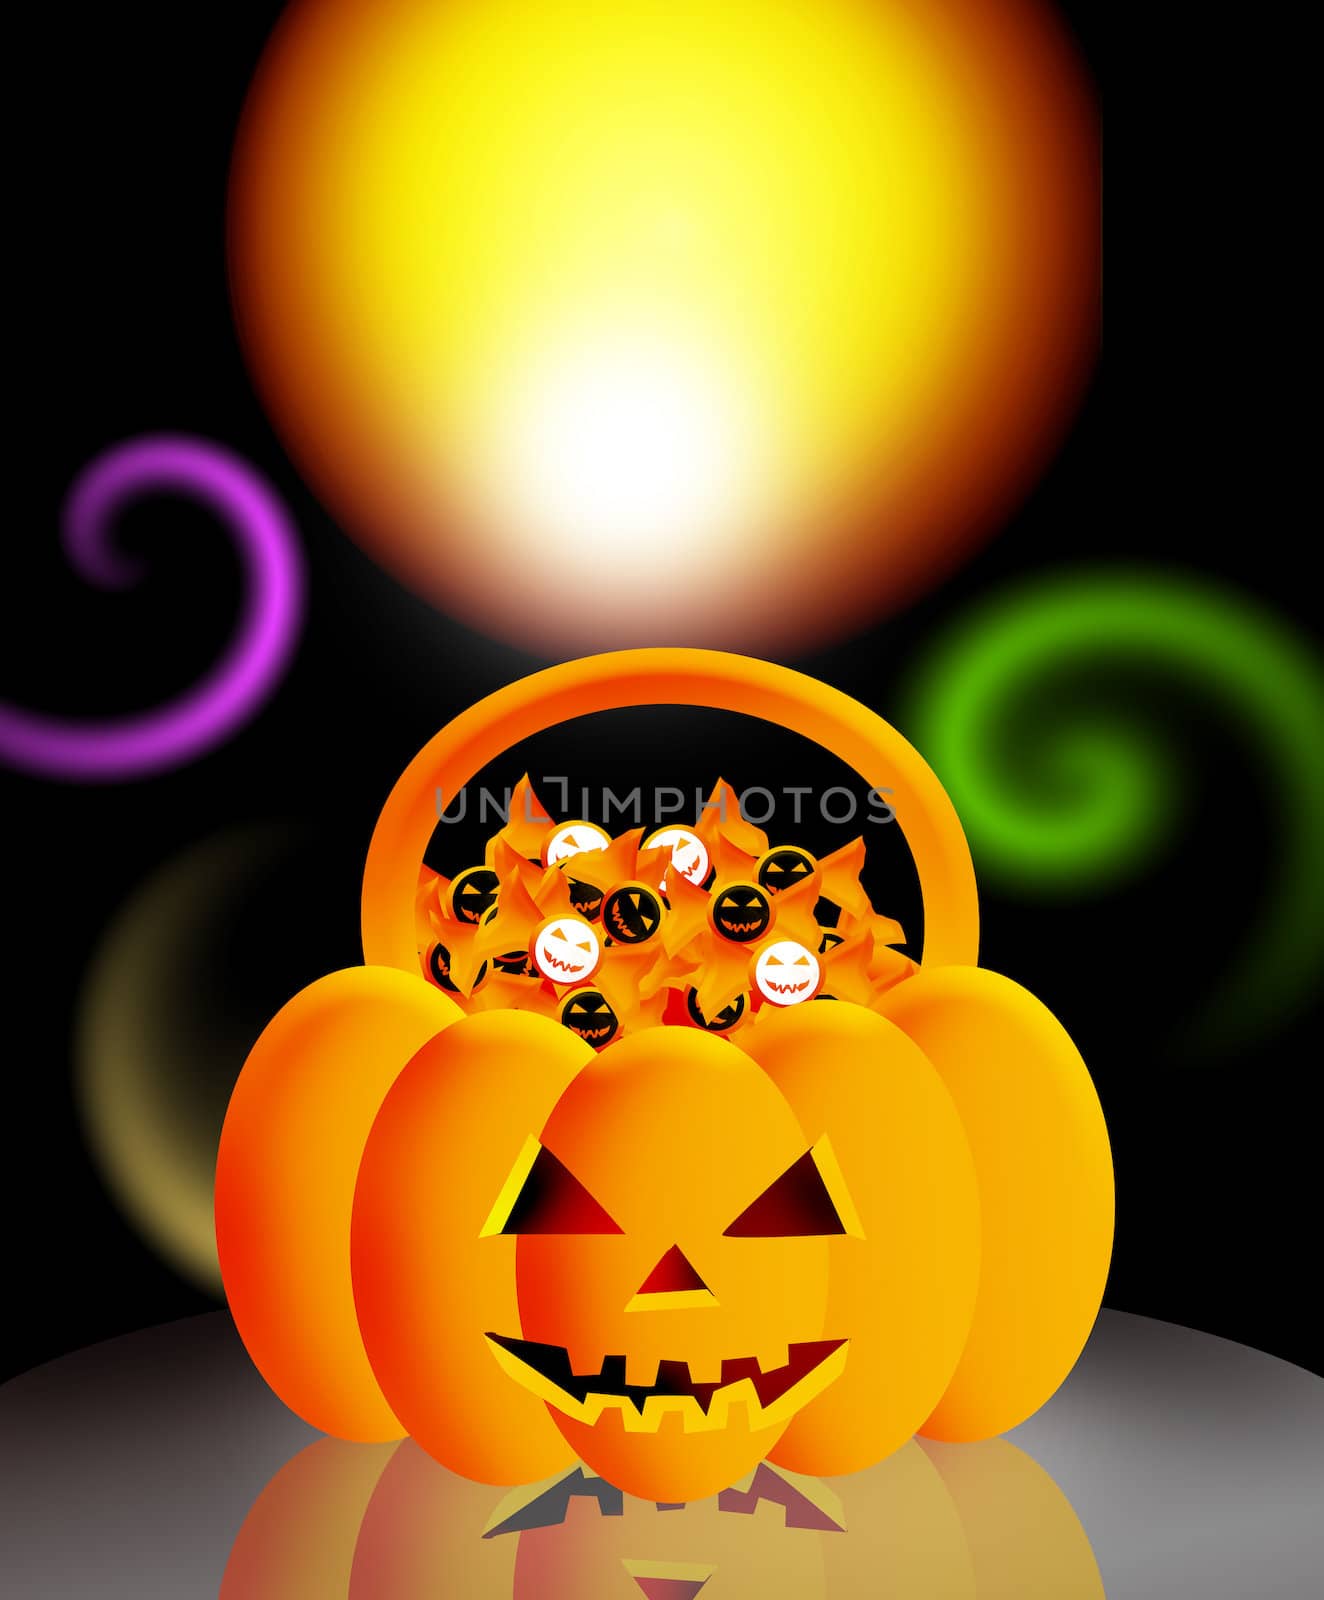 Halloween candy in the pumpkin